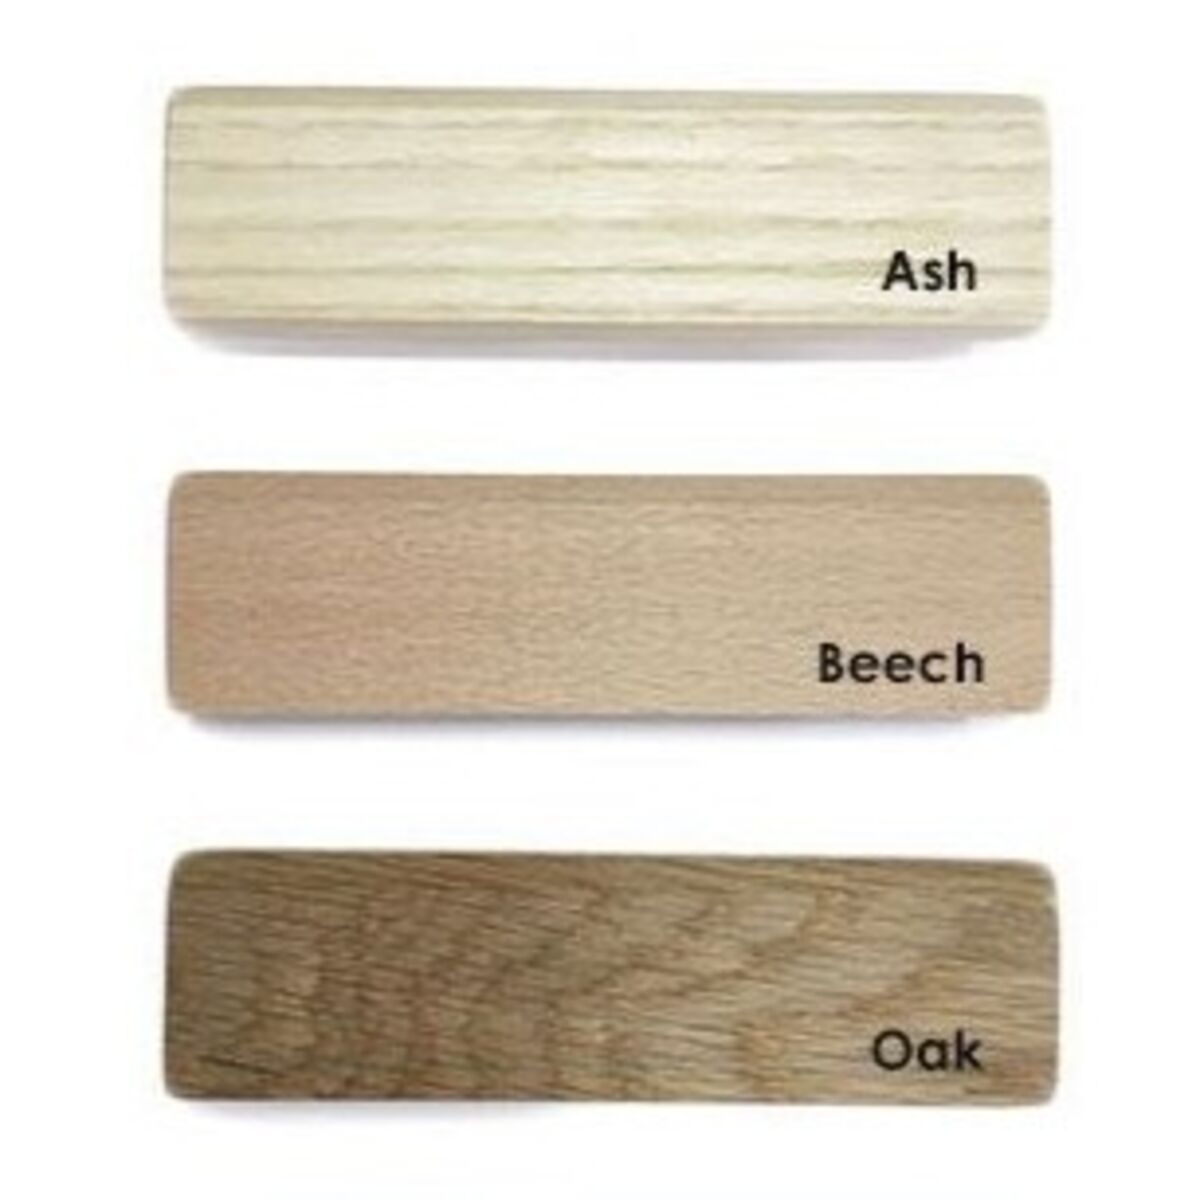 wood-finishes-ash-beech-sapele-oak_9e0c9852-3ca3-47f6-85ca-ad4d0acd8a09_1024x1024.jpg